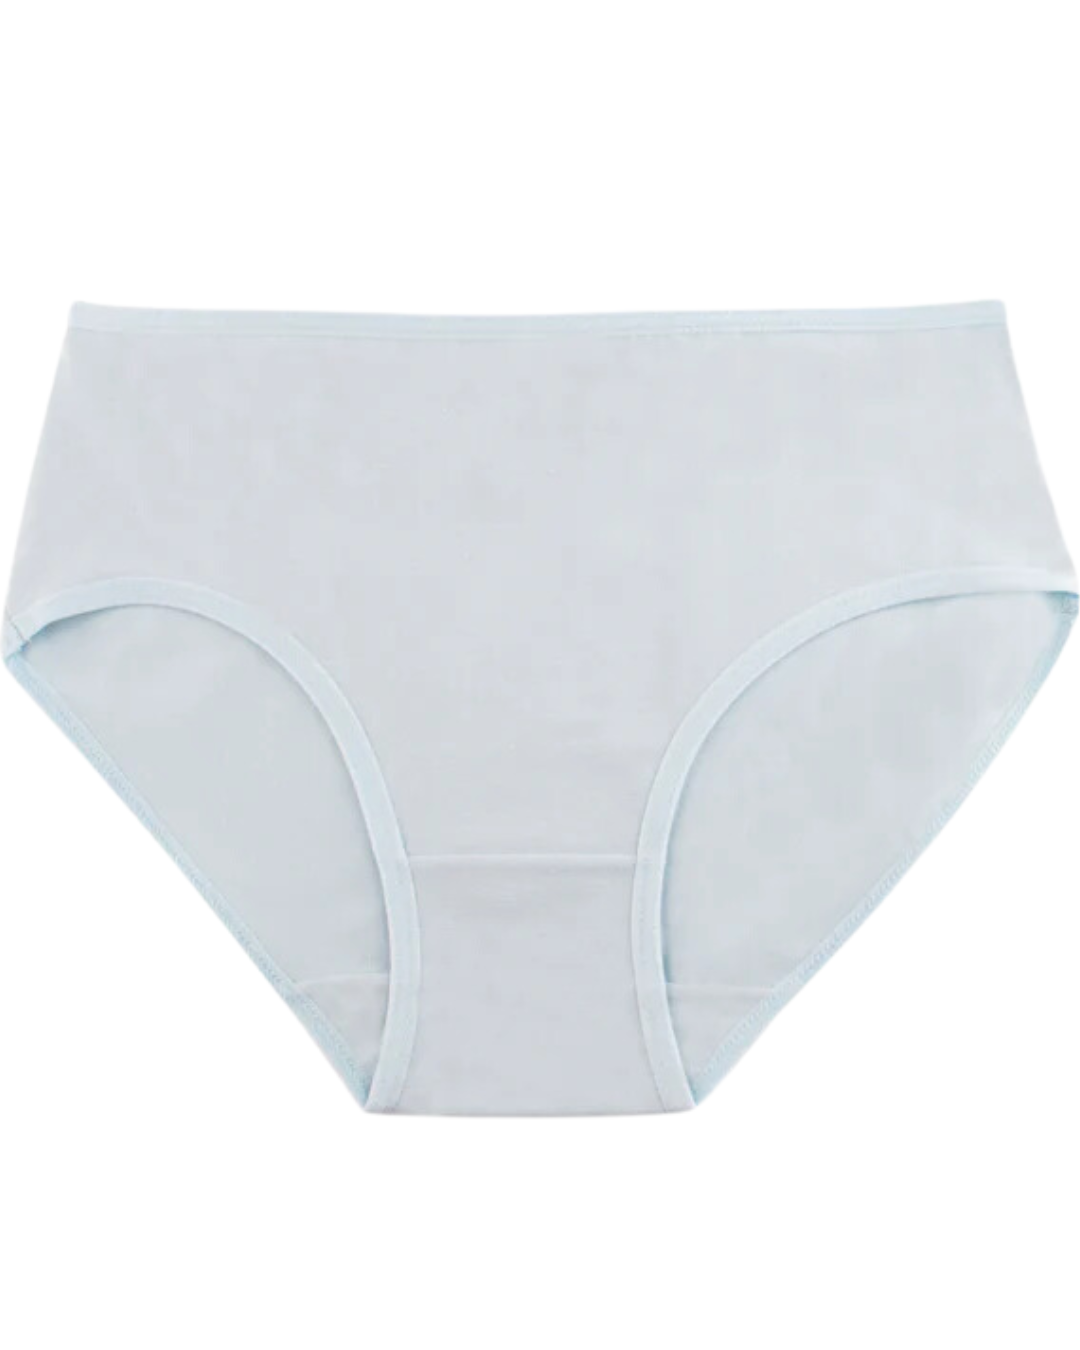 Underwear for women, midi, plain pack 3